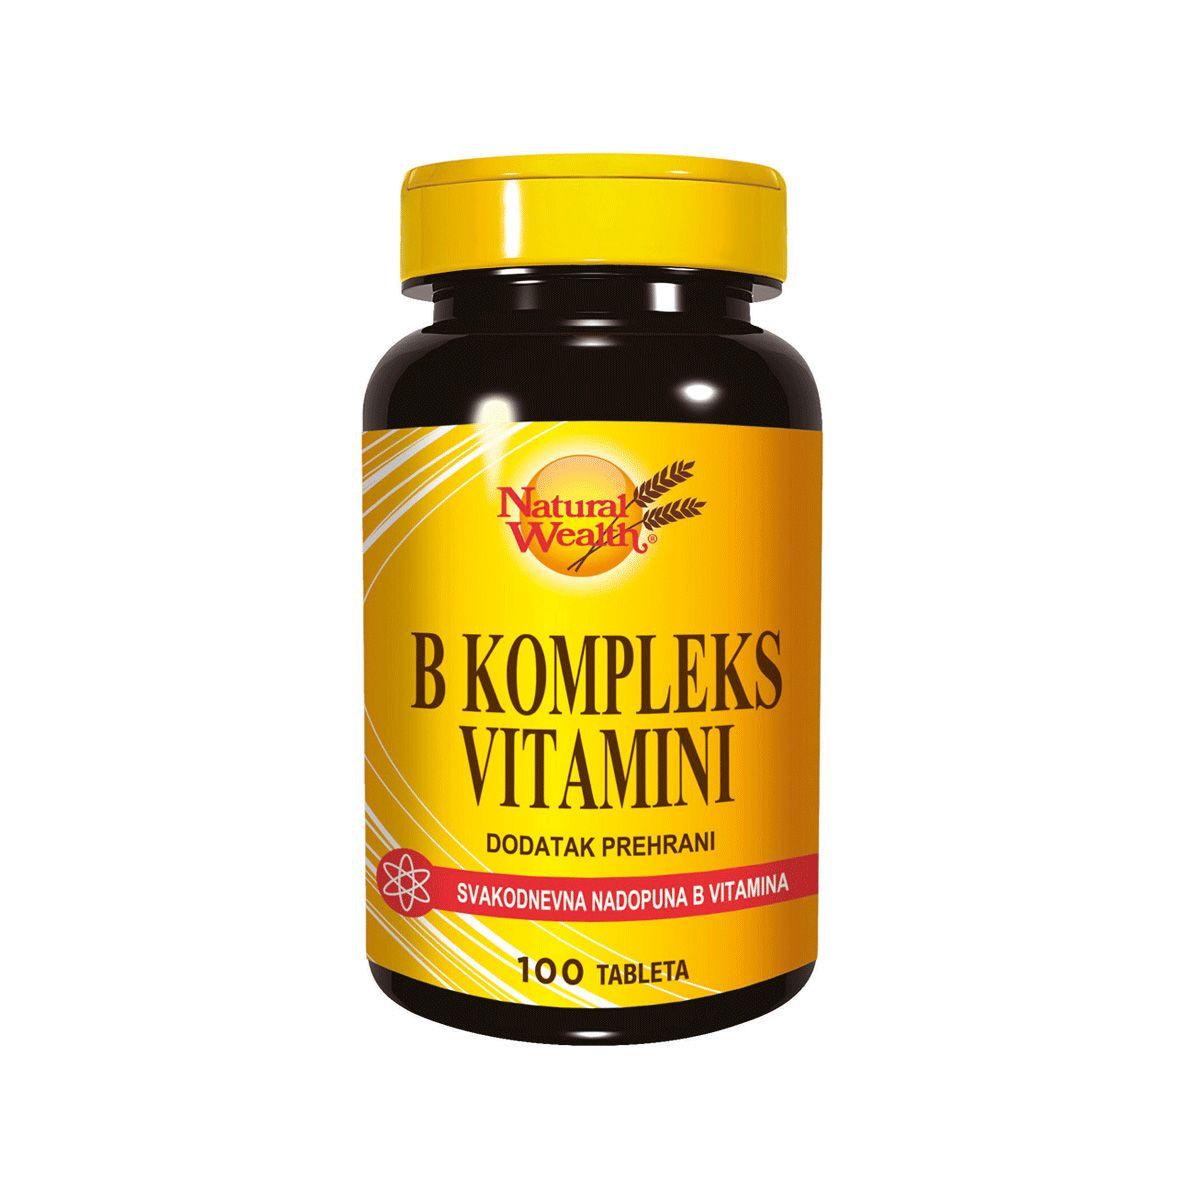 NATURAL WEALTH Vitamin B complex A100